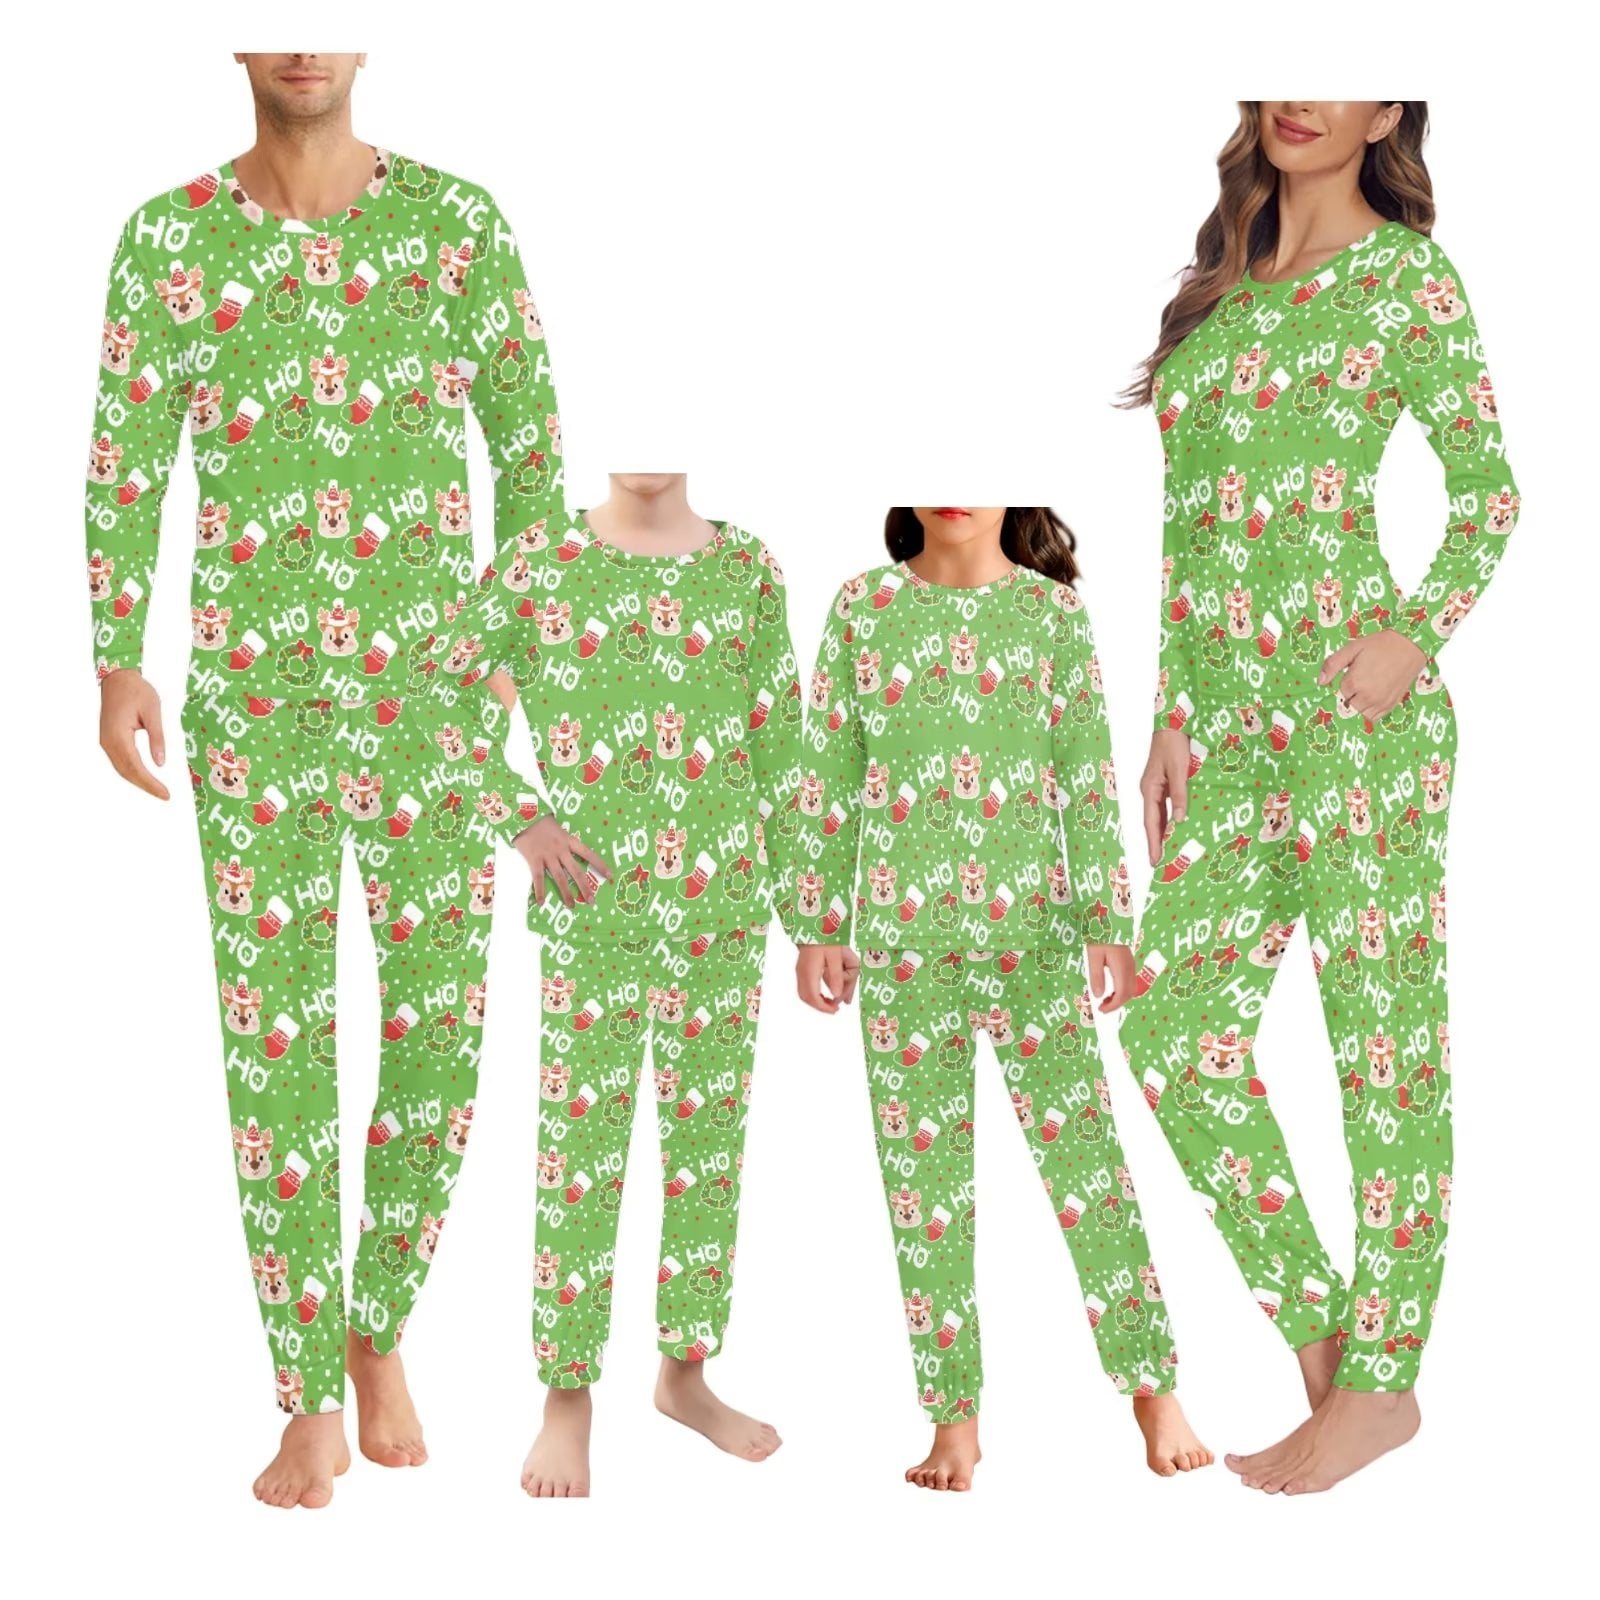 Renewold Matching Family Pajamas Sets Christmas HO HO HO Wreaths Men PJ ...